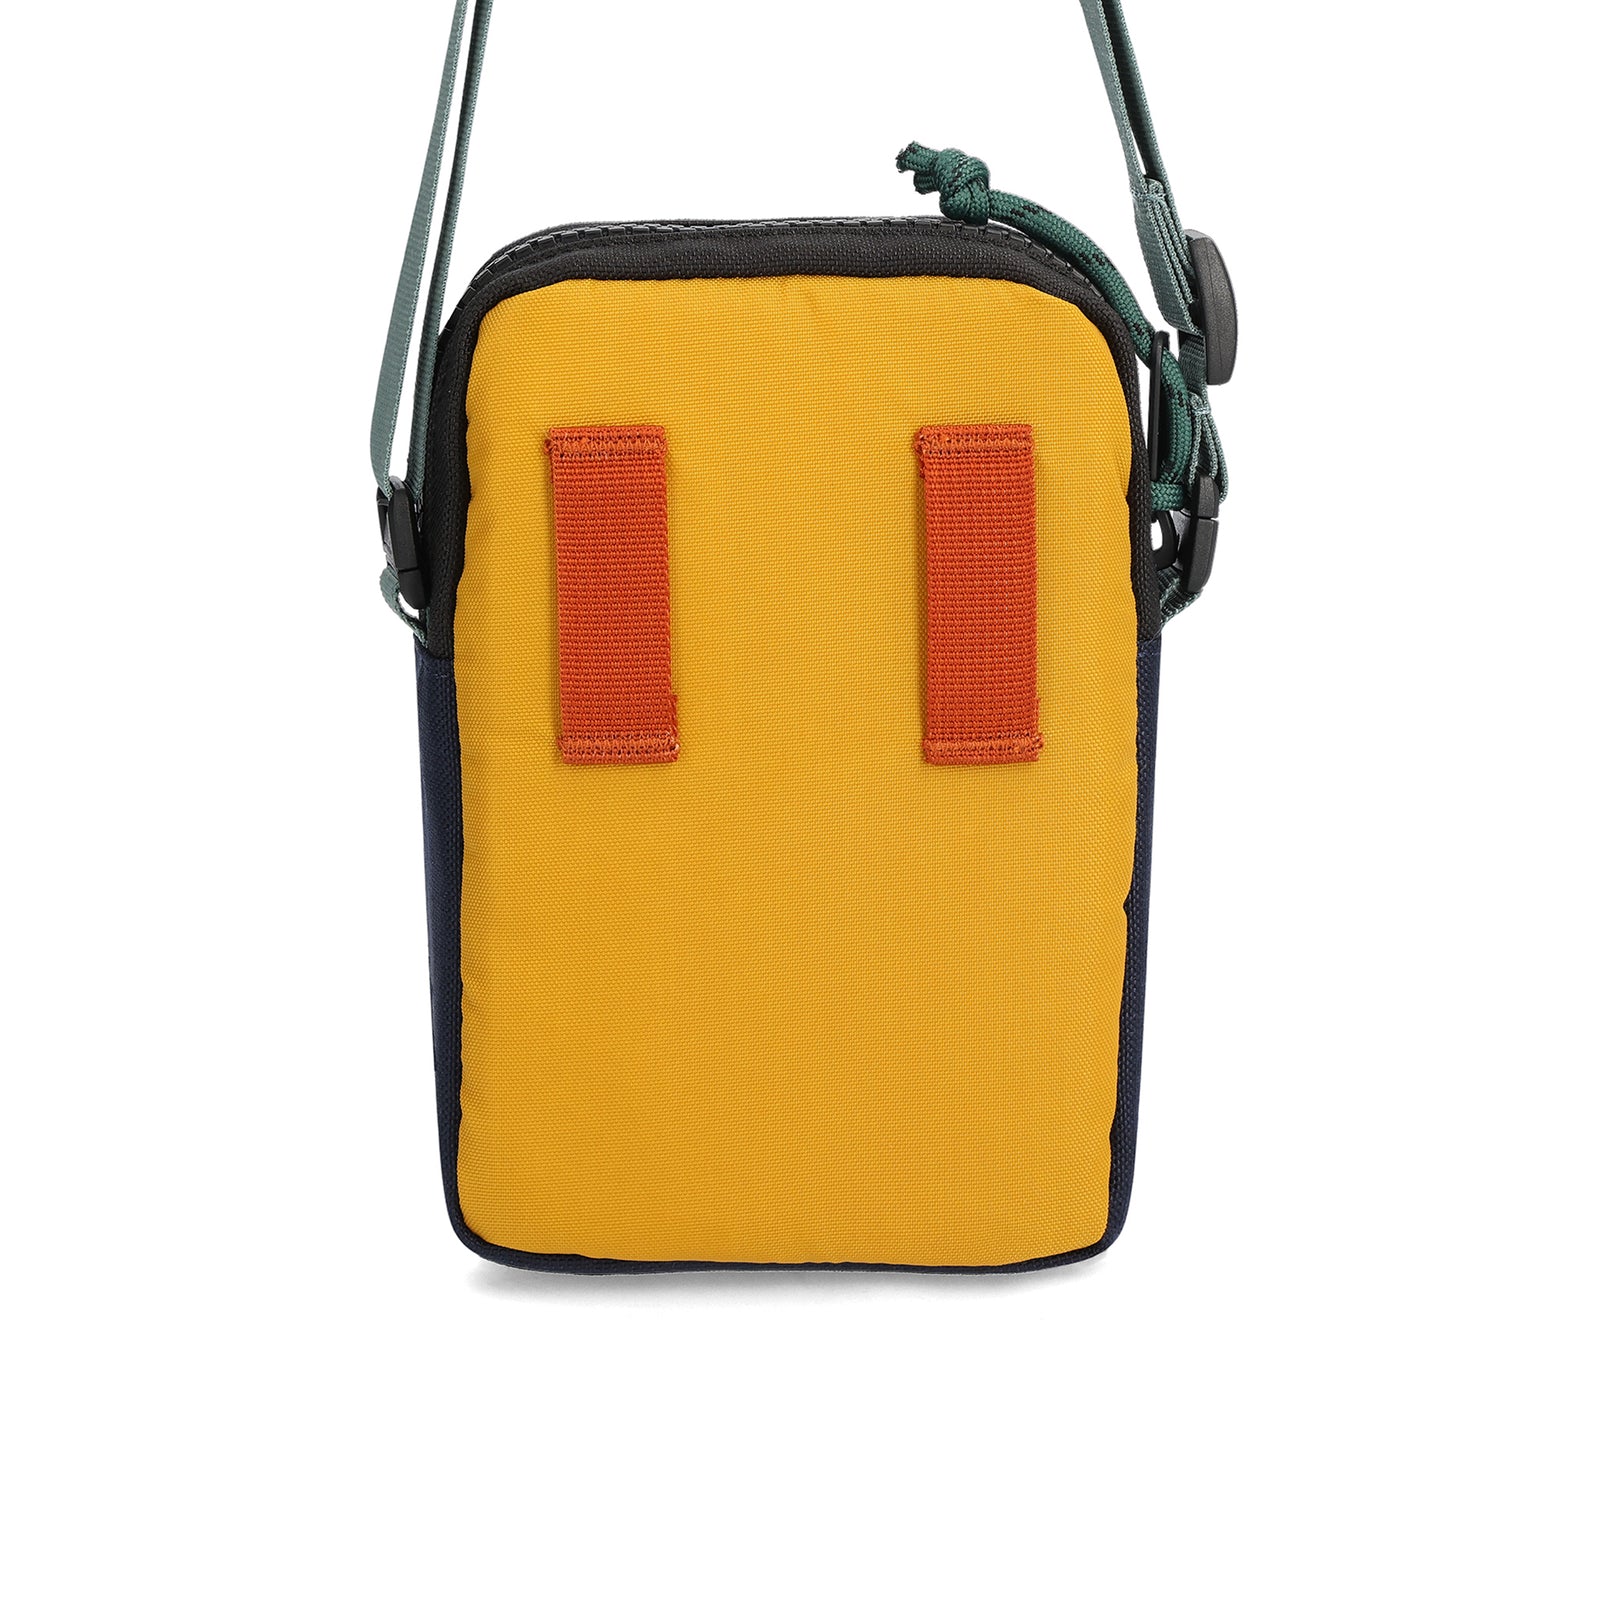 Back View of Topo Designs Mini Shoulder Bag in "Navy / Mustard"